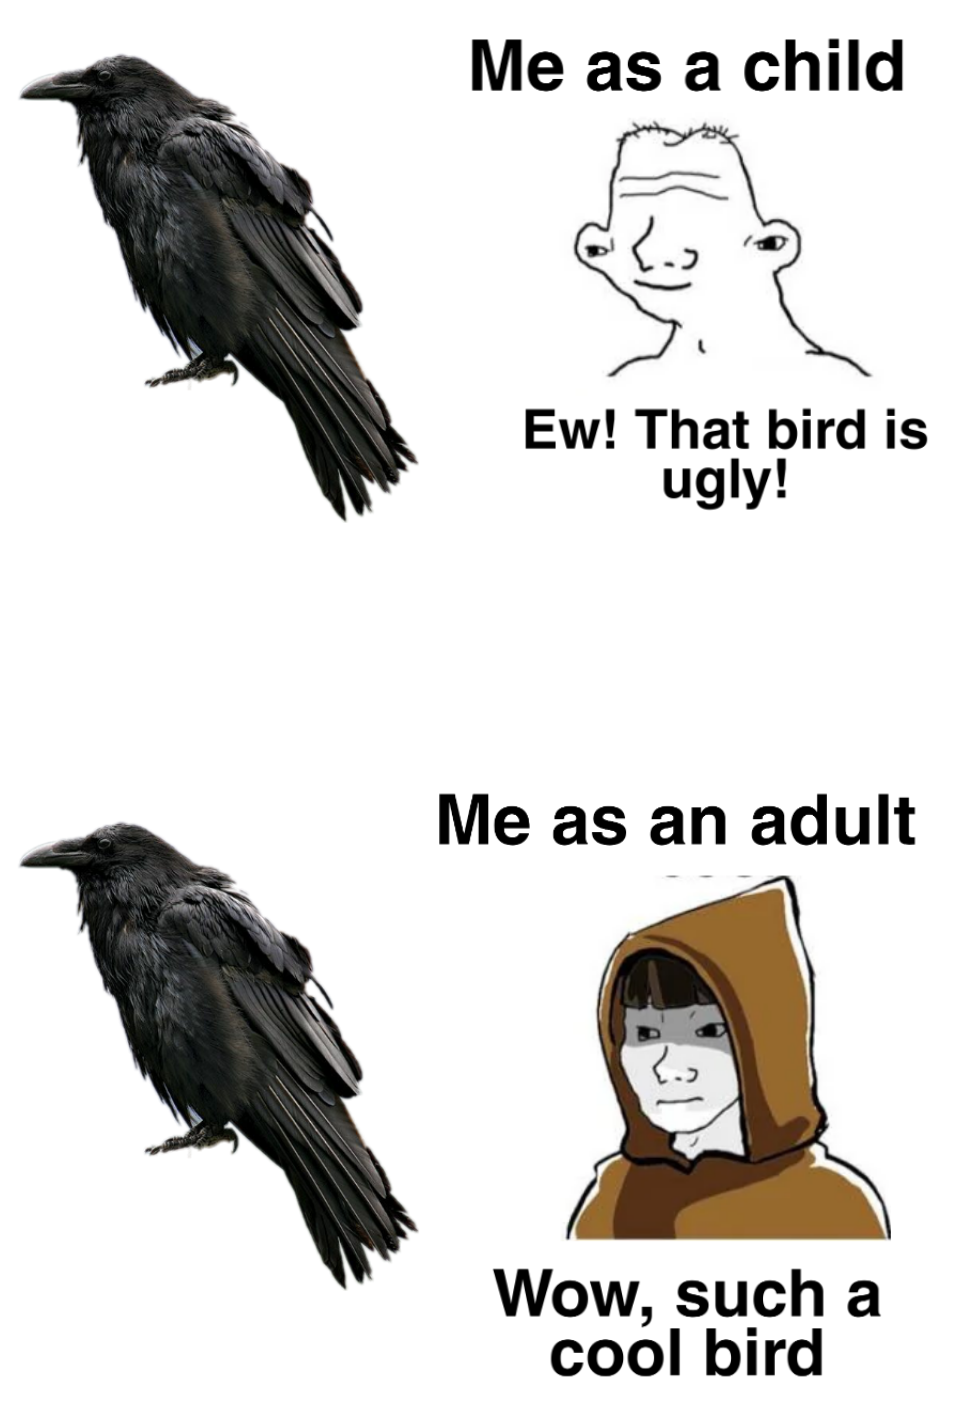 Let's be honest, ravens were always cool